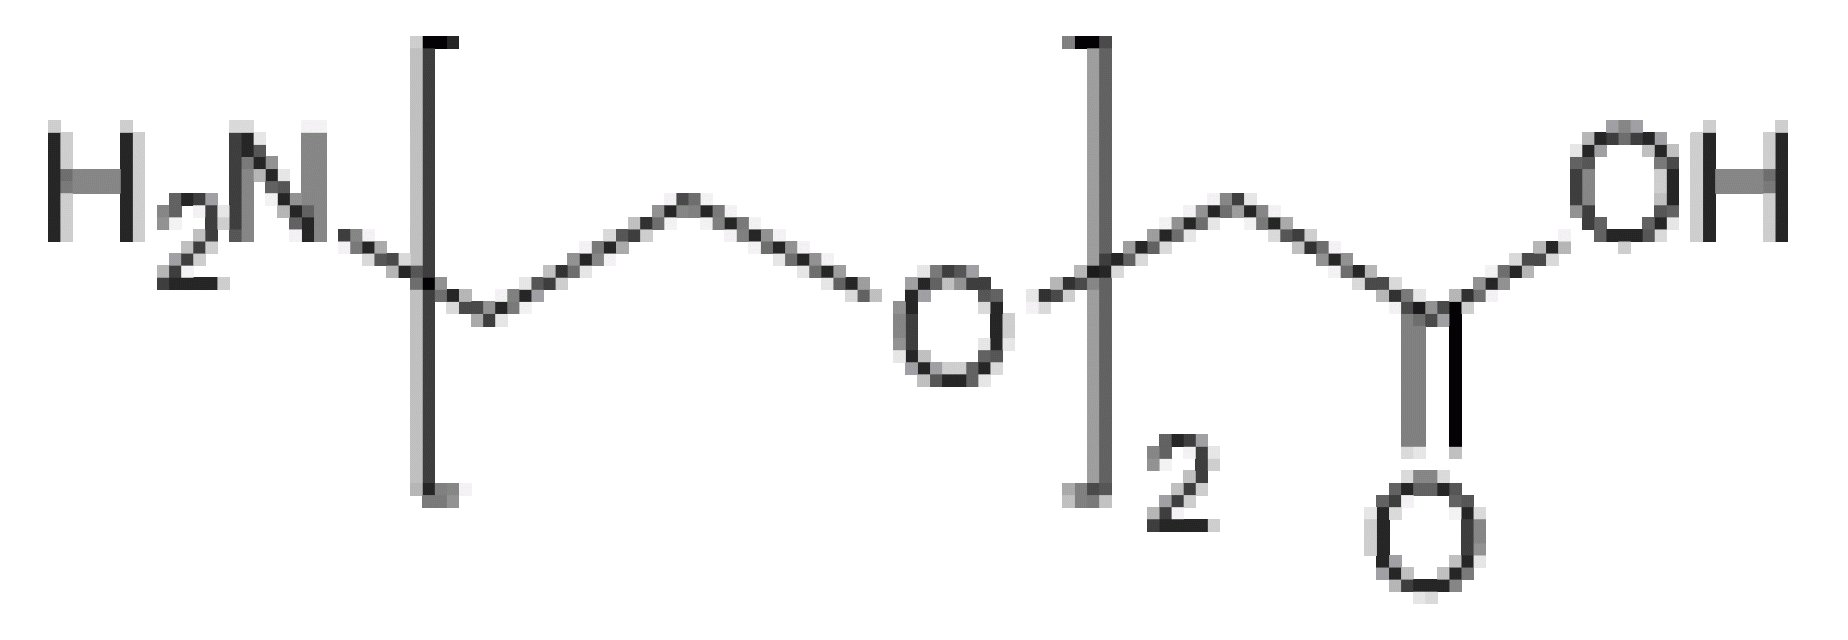 Nh2ch2ch2cooh. Ch3cooh графическая формула. Производные тиофена фармхимия. Nh2-Ch-Cooh. Трихлорпропан гидролиз